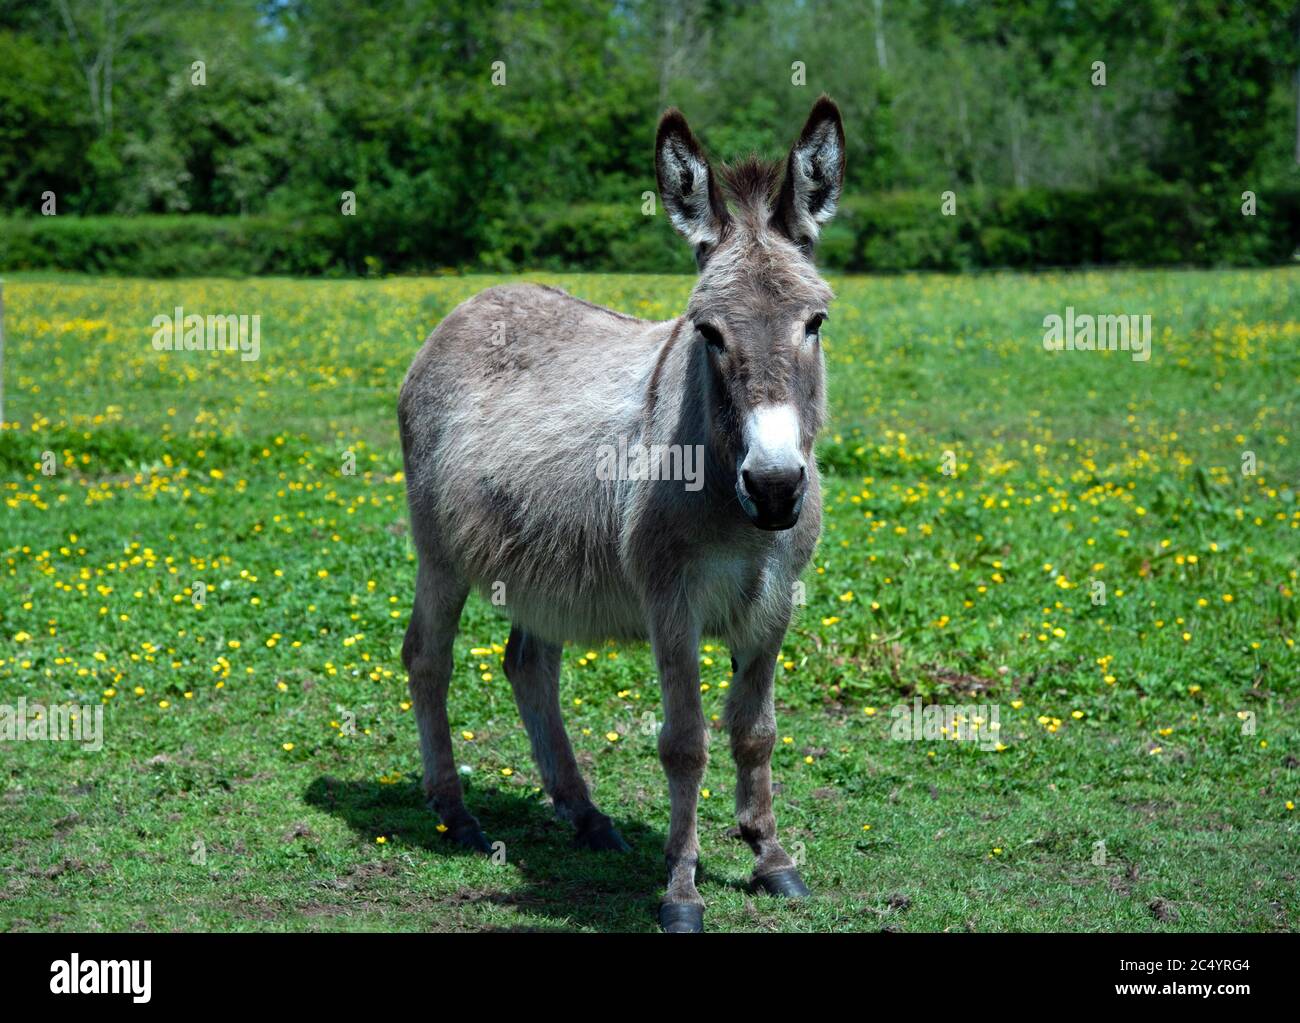 Donkey portrait Stock Photo